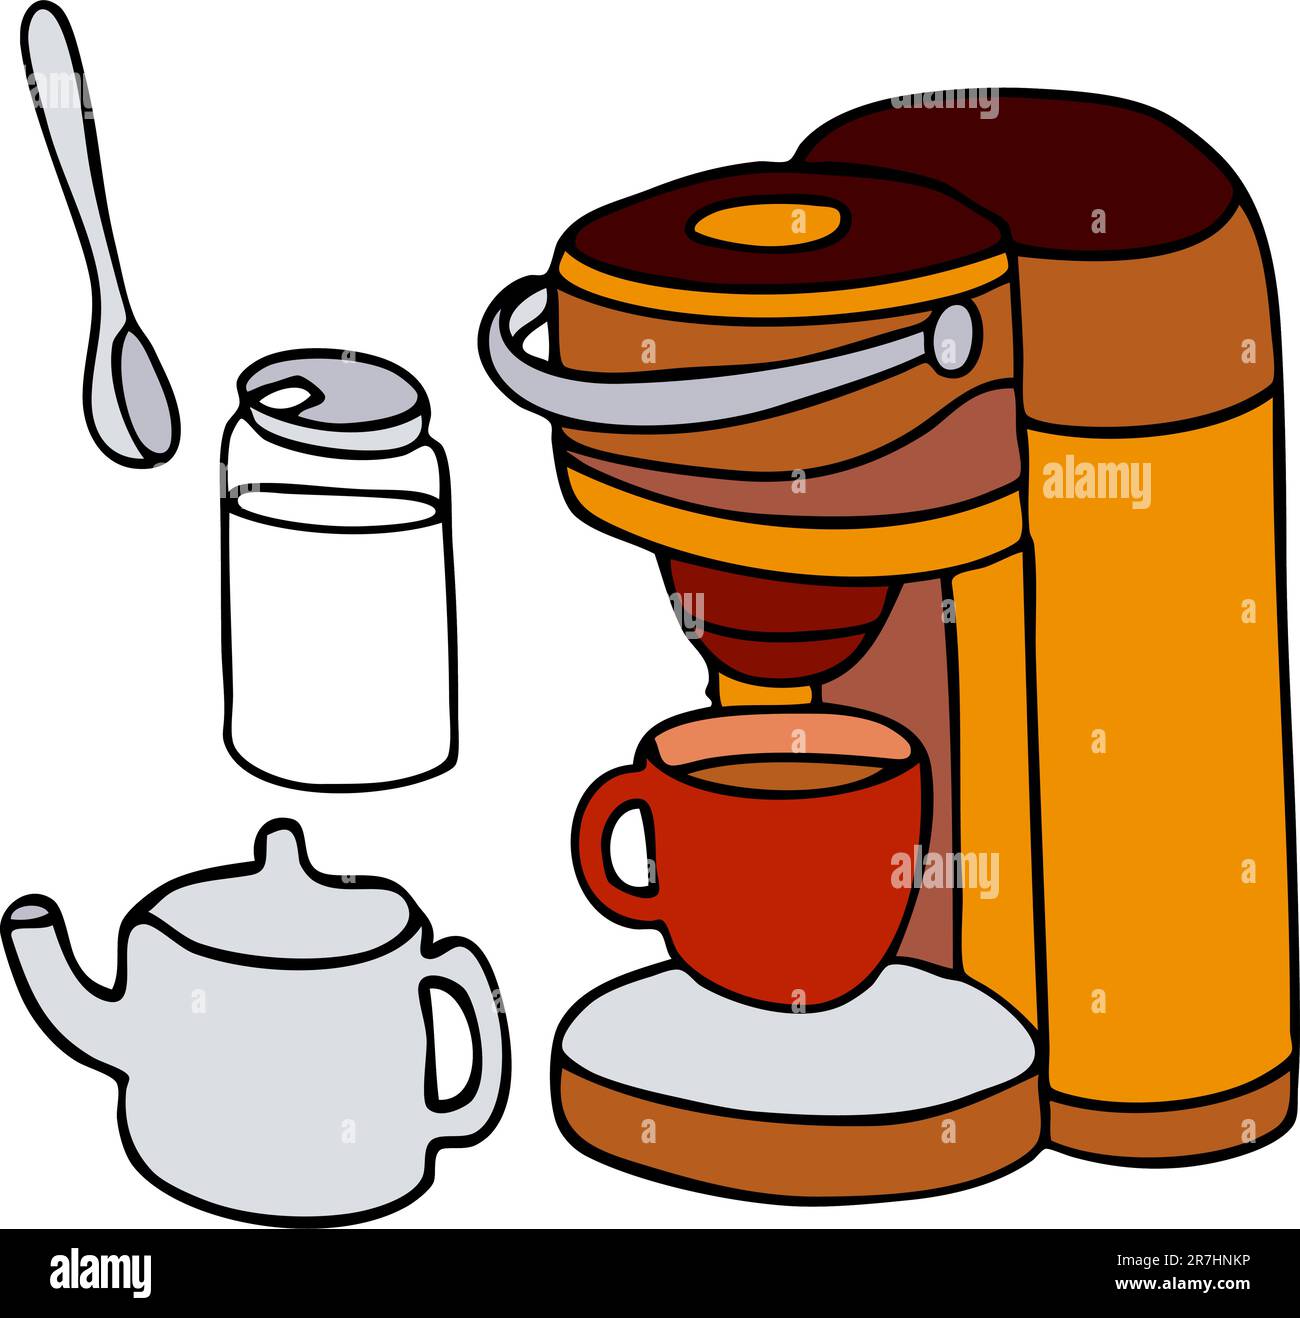 https://c8.alamy.com/comp/2R7HNKP/an-image-of-a-single-serving-coffee-machine-set-2R7HNKP.jpg